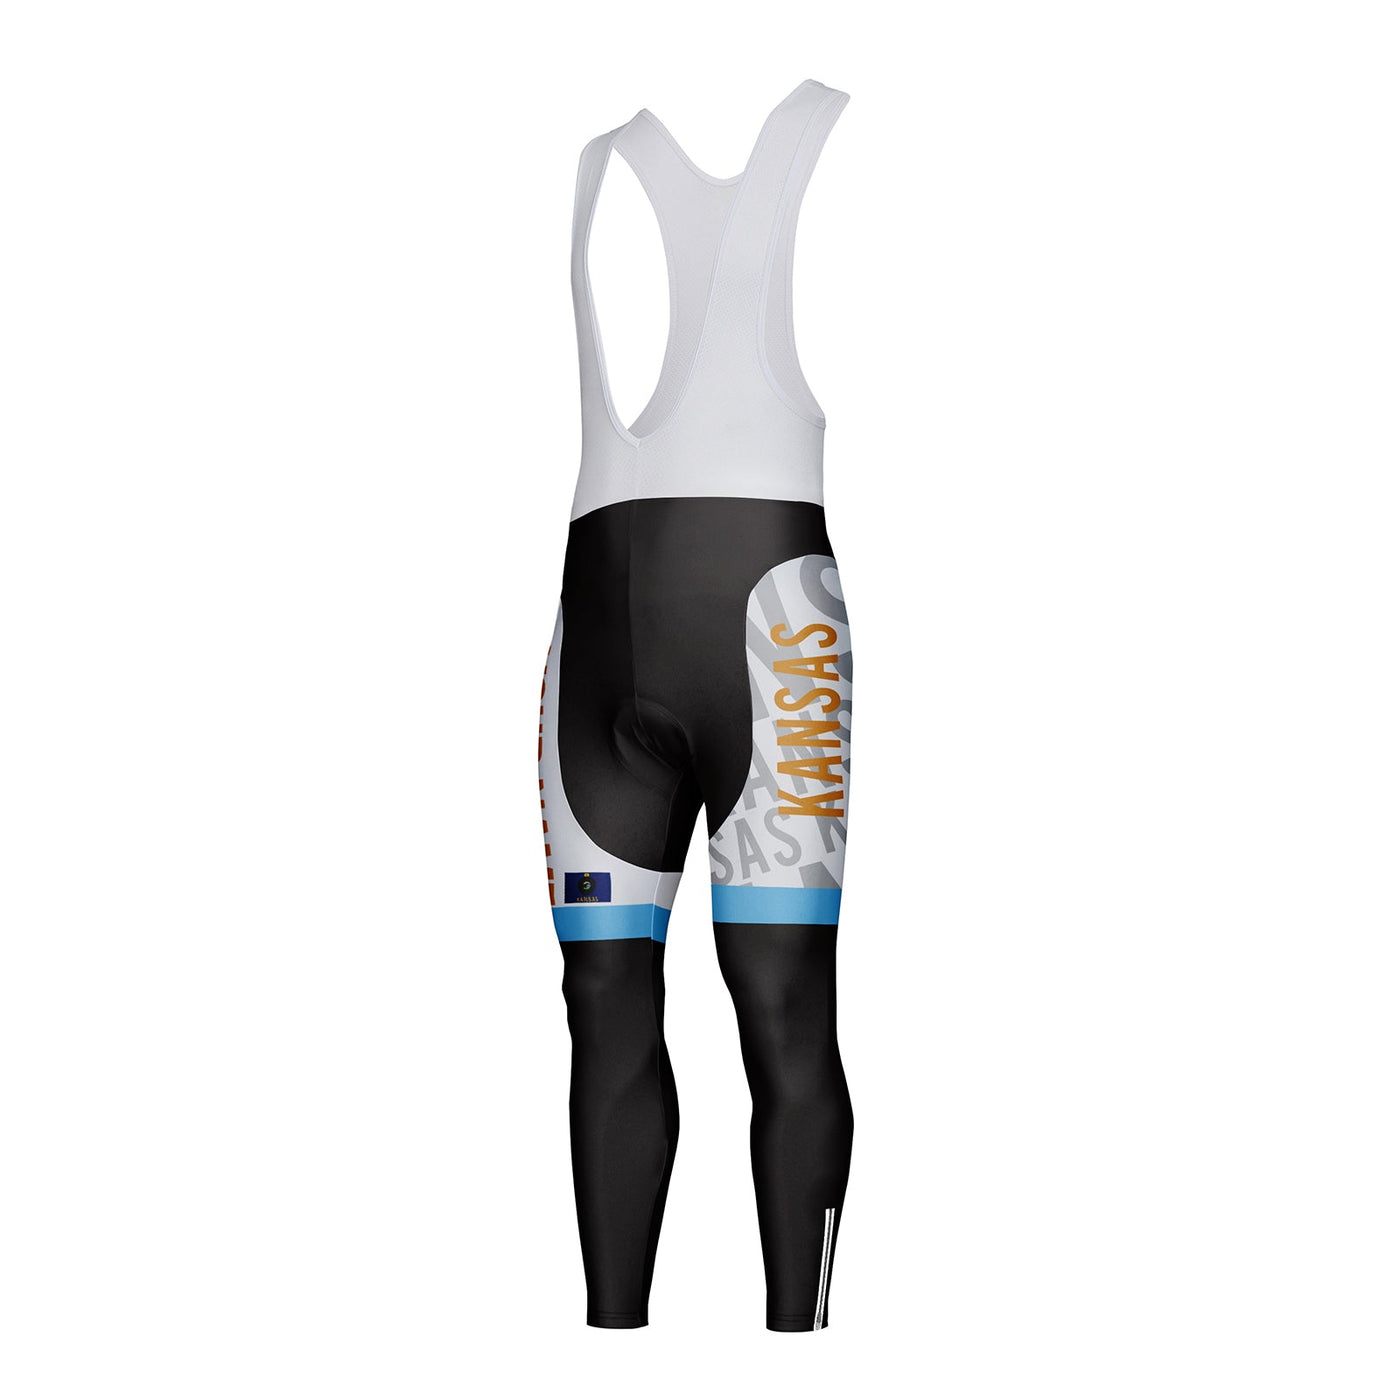 Customized Kansas Unisex Thermal Fleece Cycling Bib Tights Long Pants